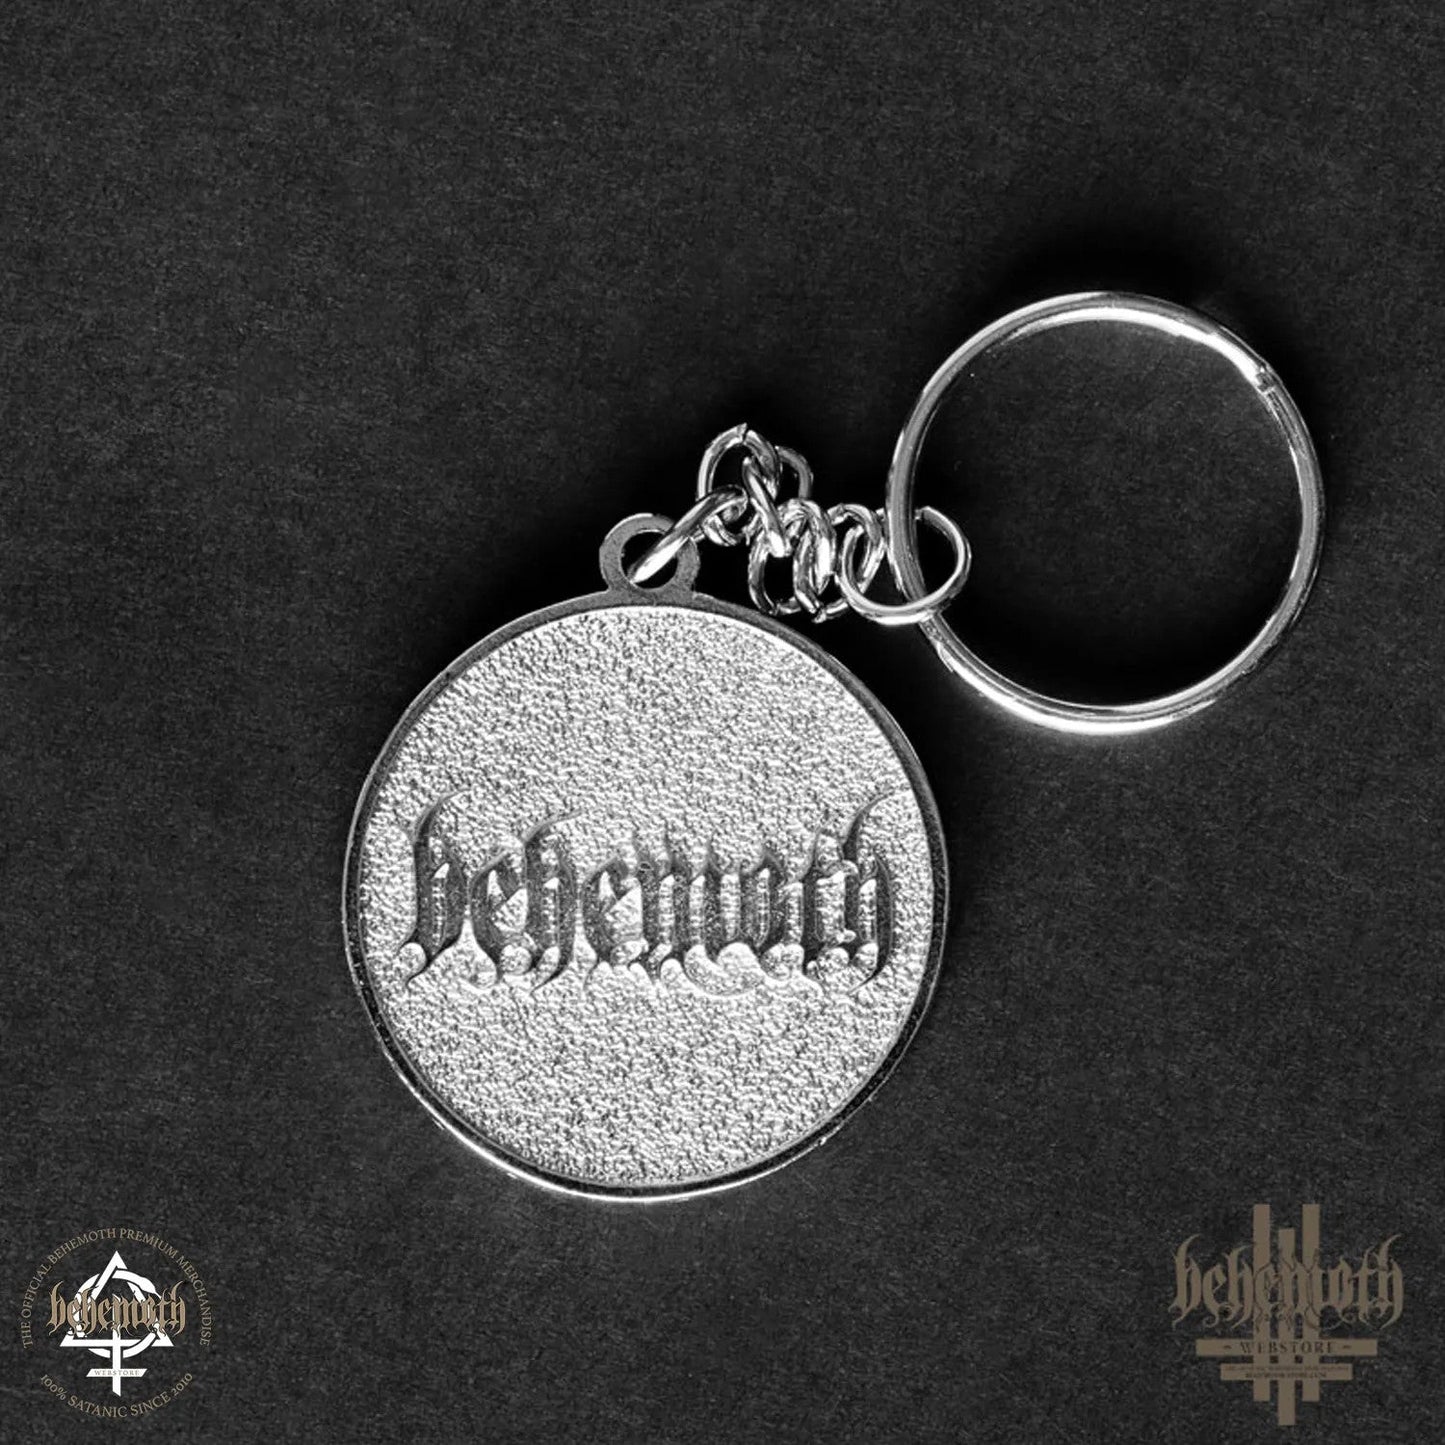 A Behemoth 'The Unholy Trinity' enamel keychain